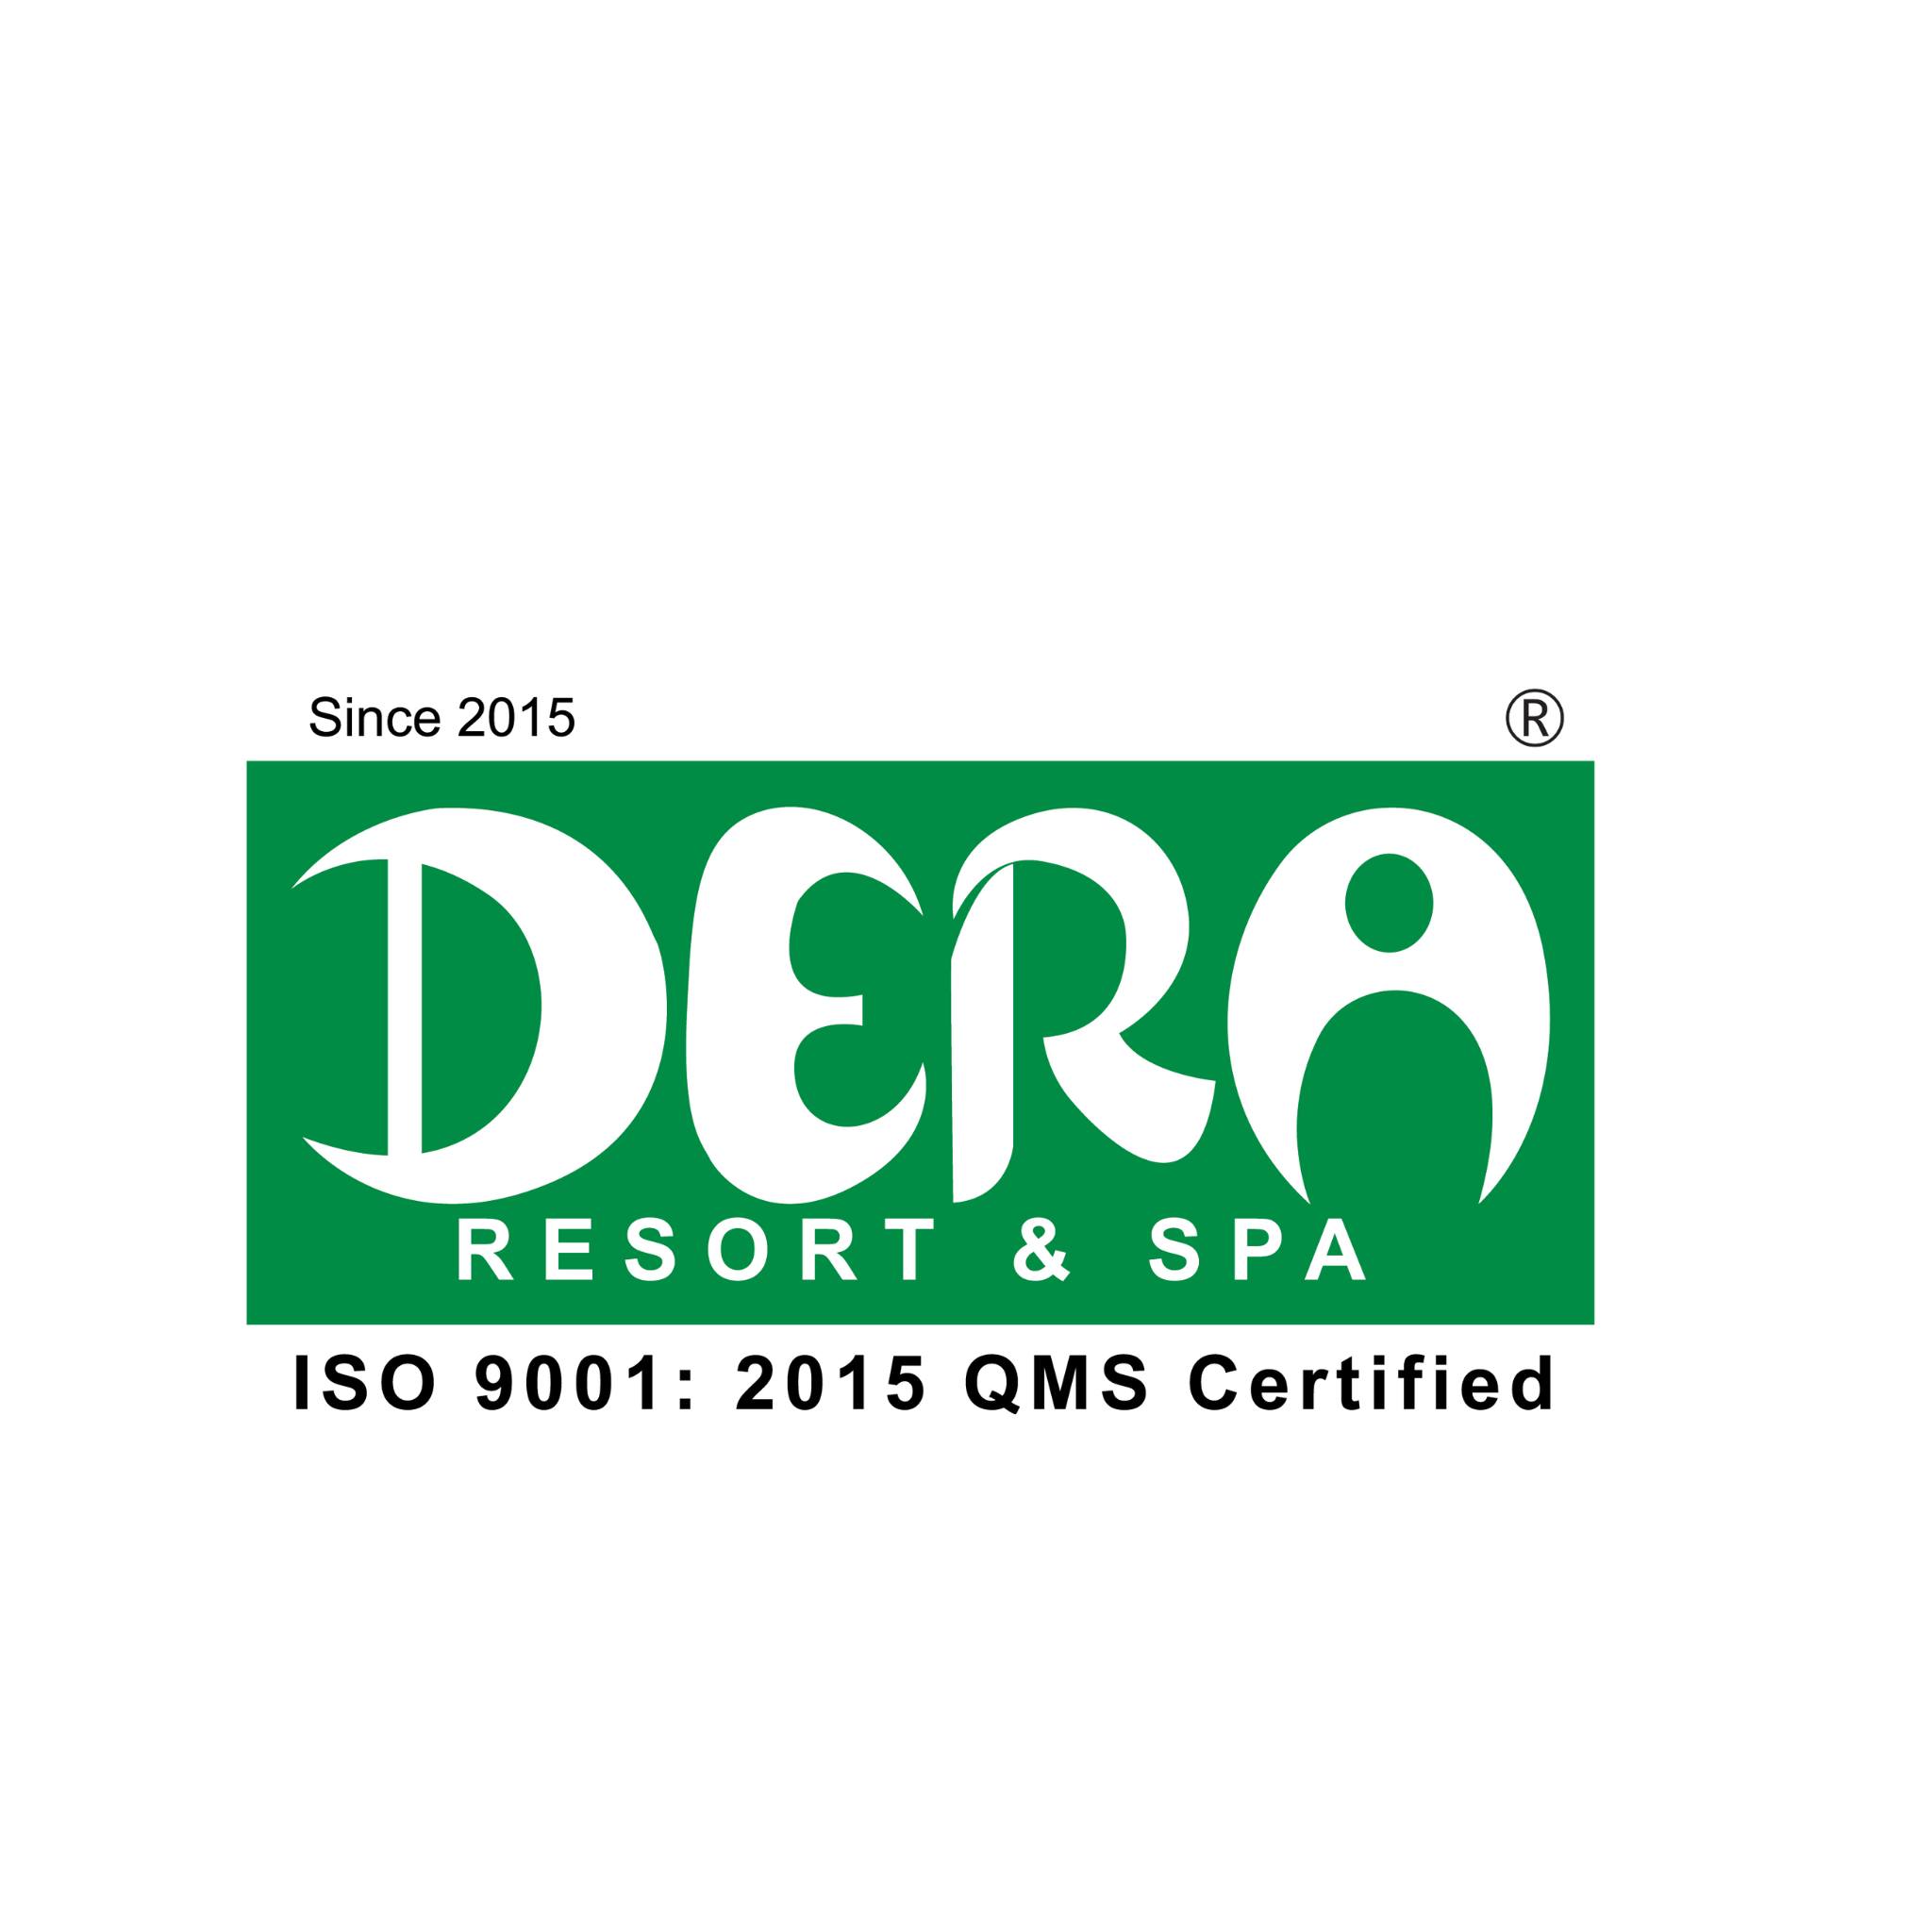 DERA - Resort & Spa, Inani, Cox's Bazar